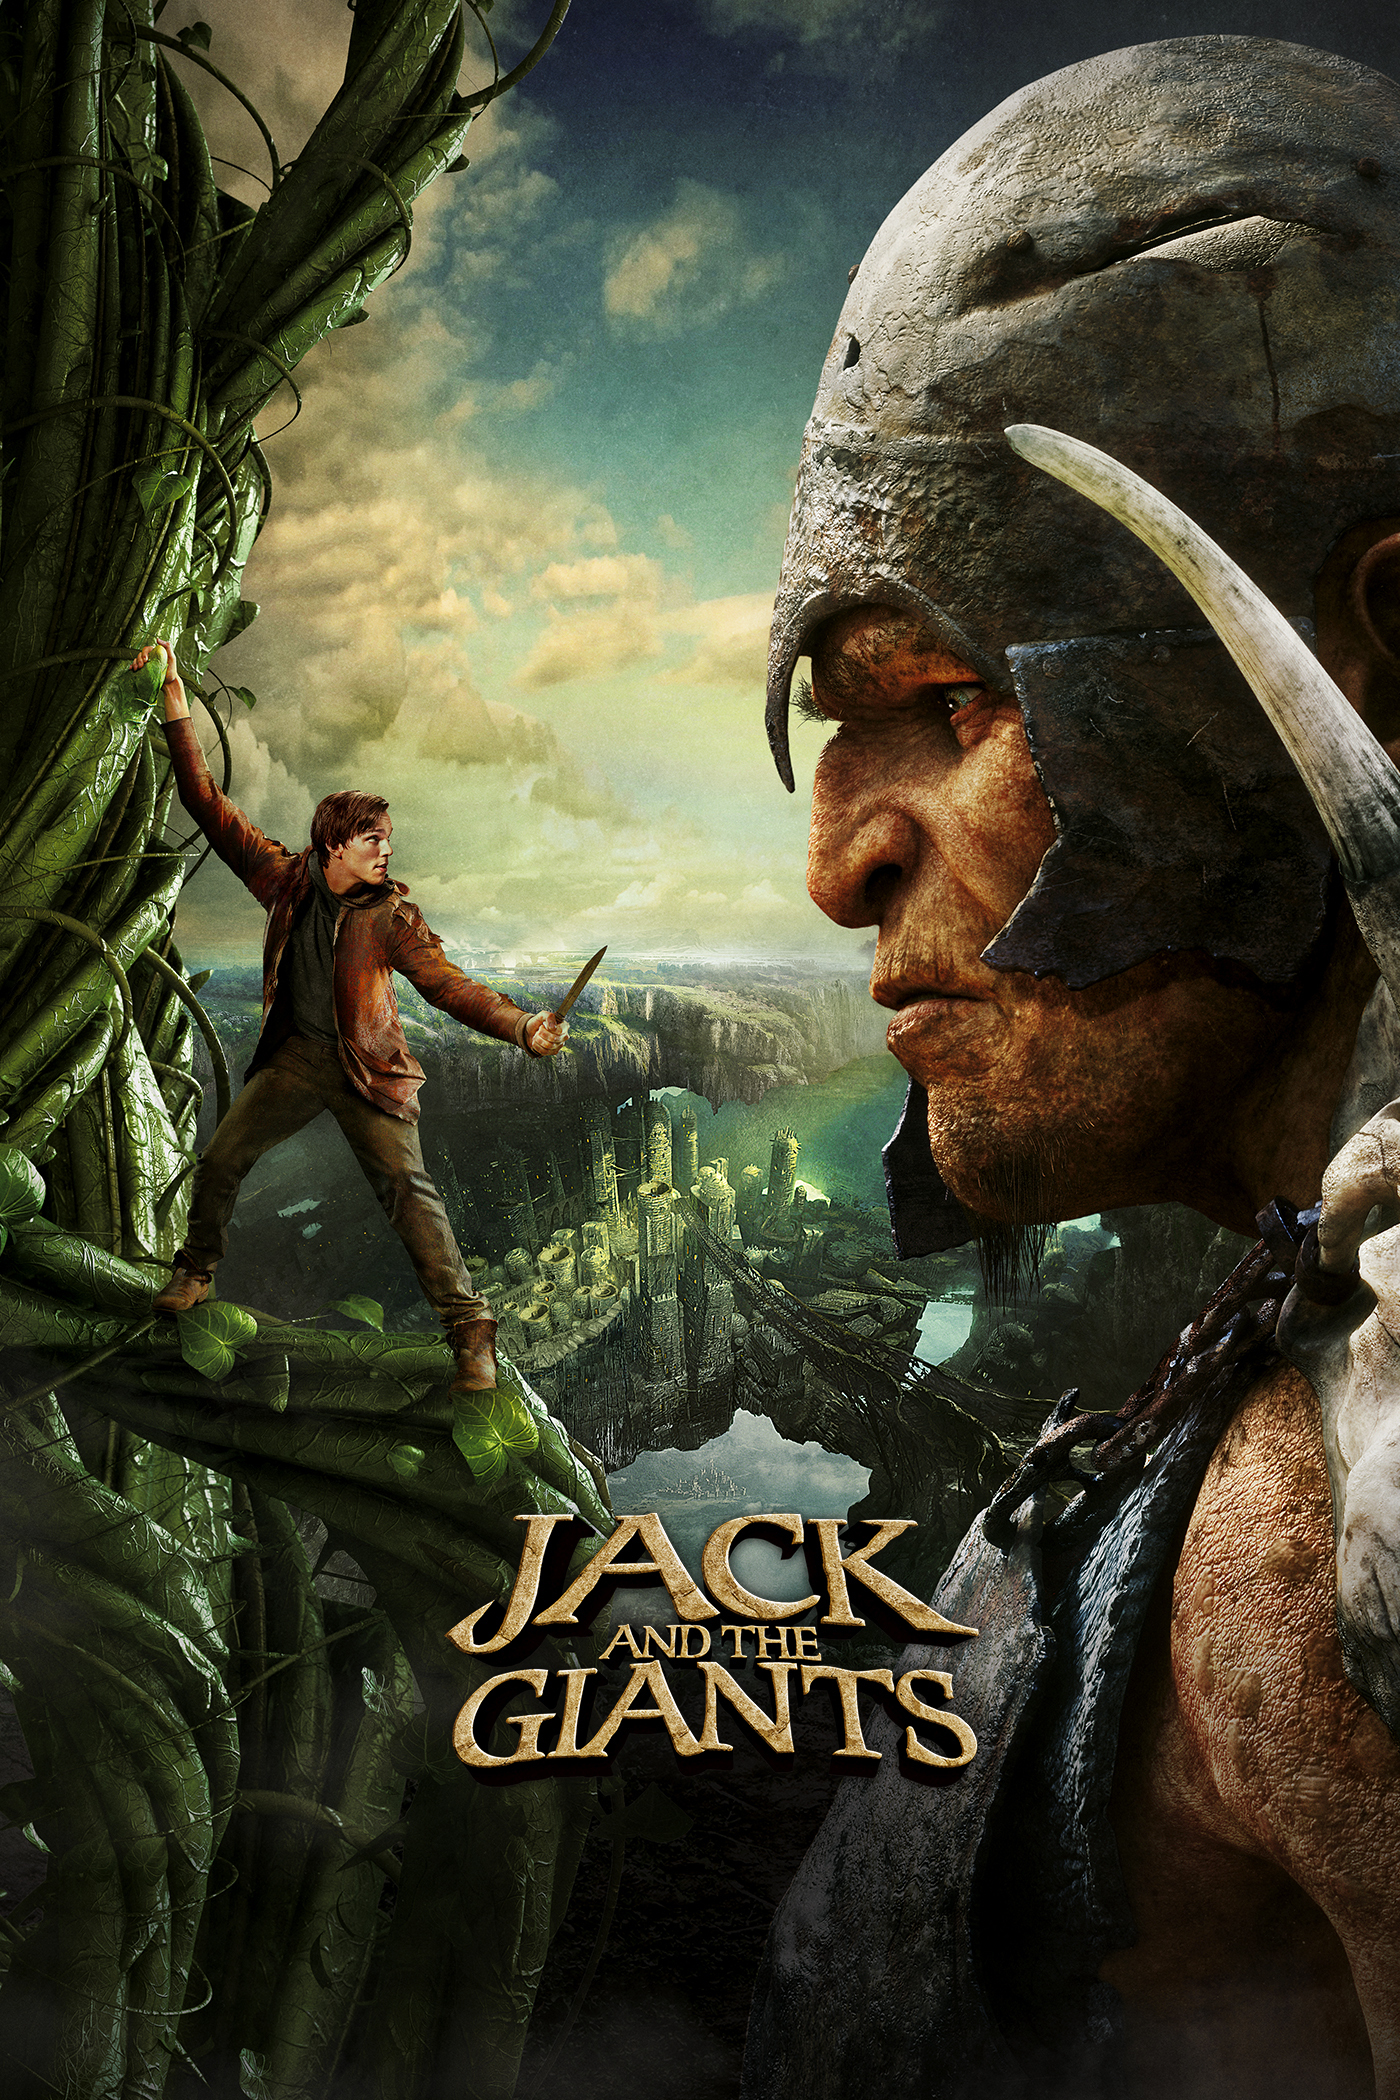 Plakat von "Jack and the Giants"